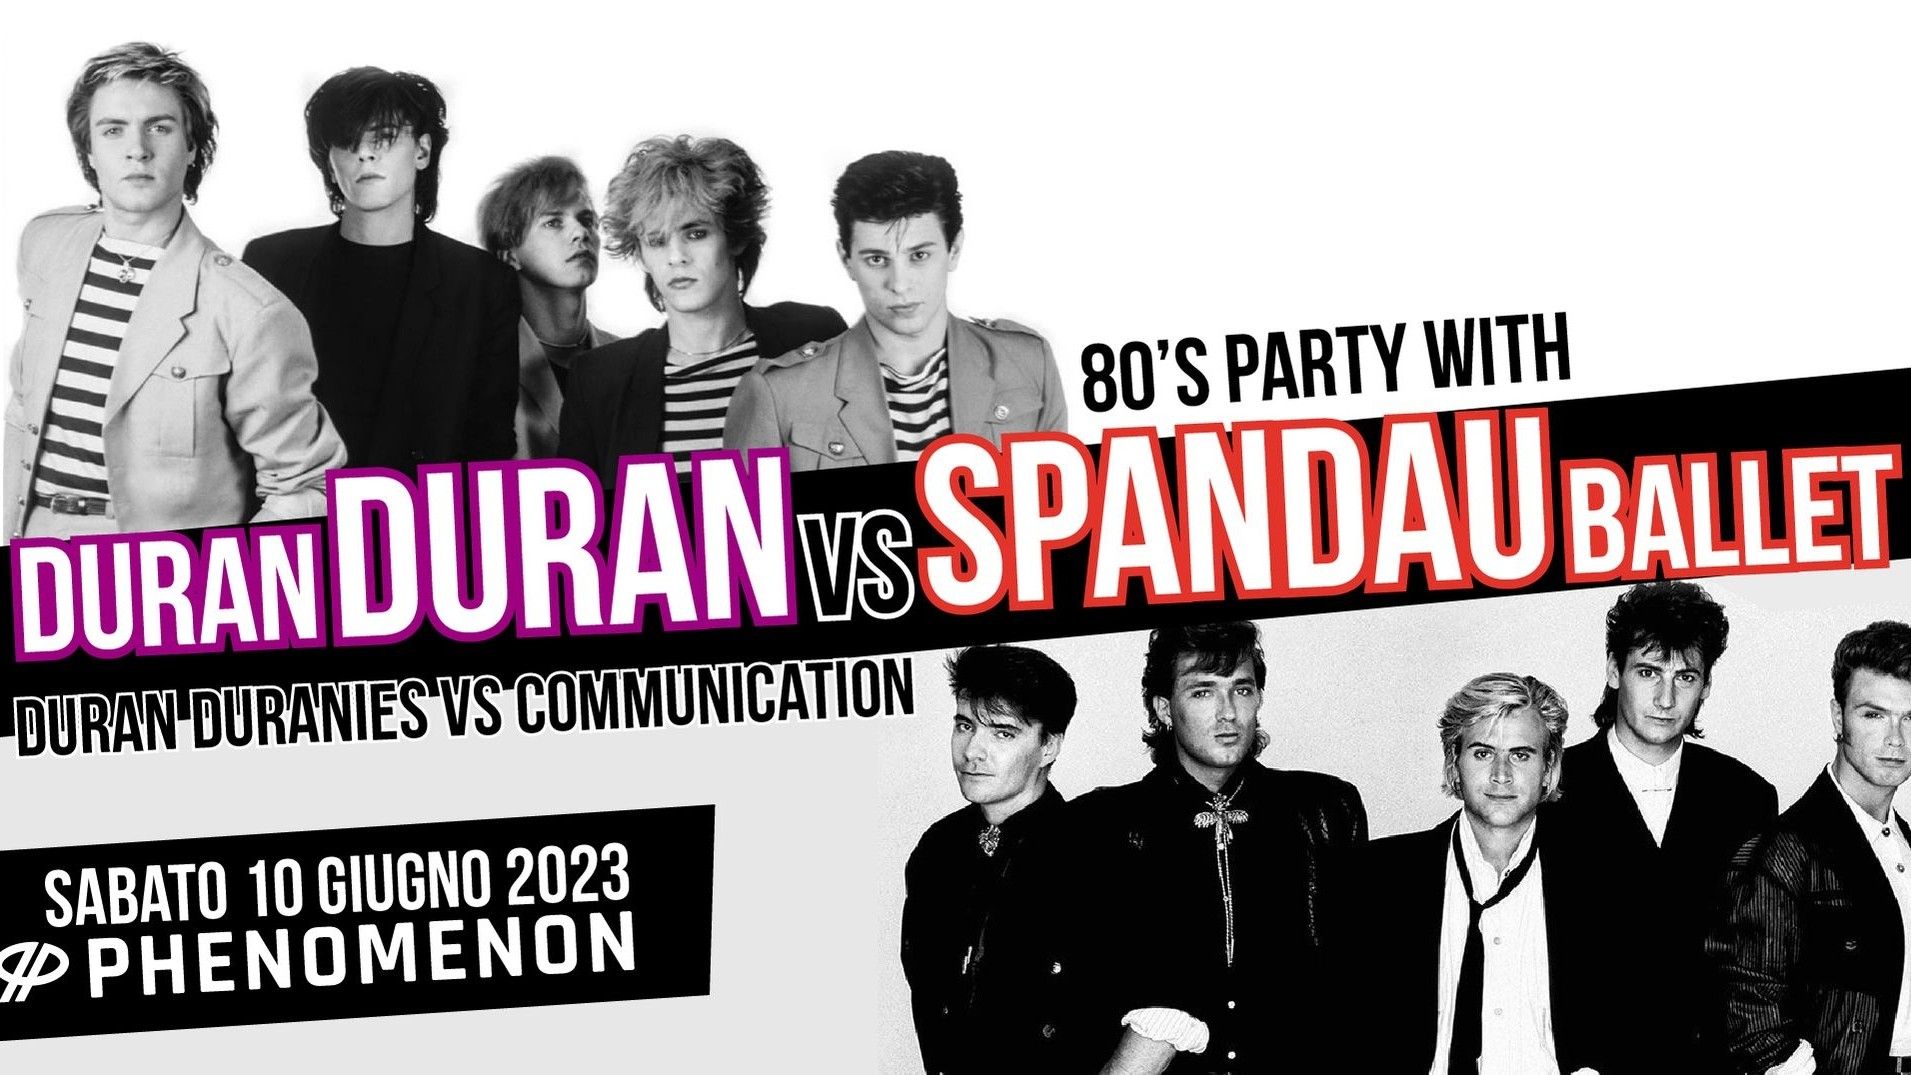 Duran Duran Vs Spandau Ballet - 80s Party